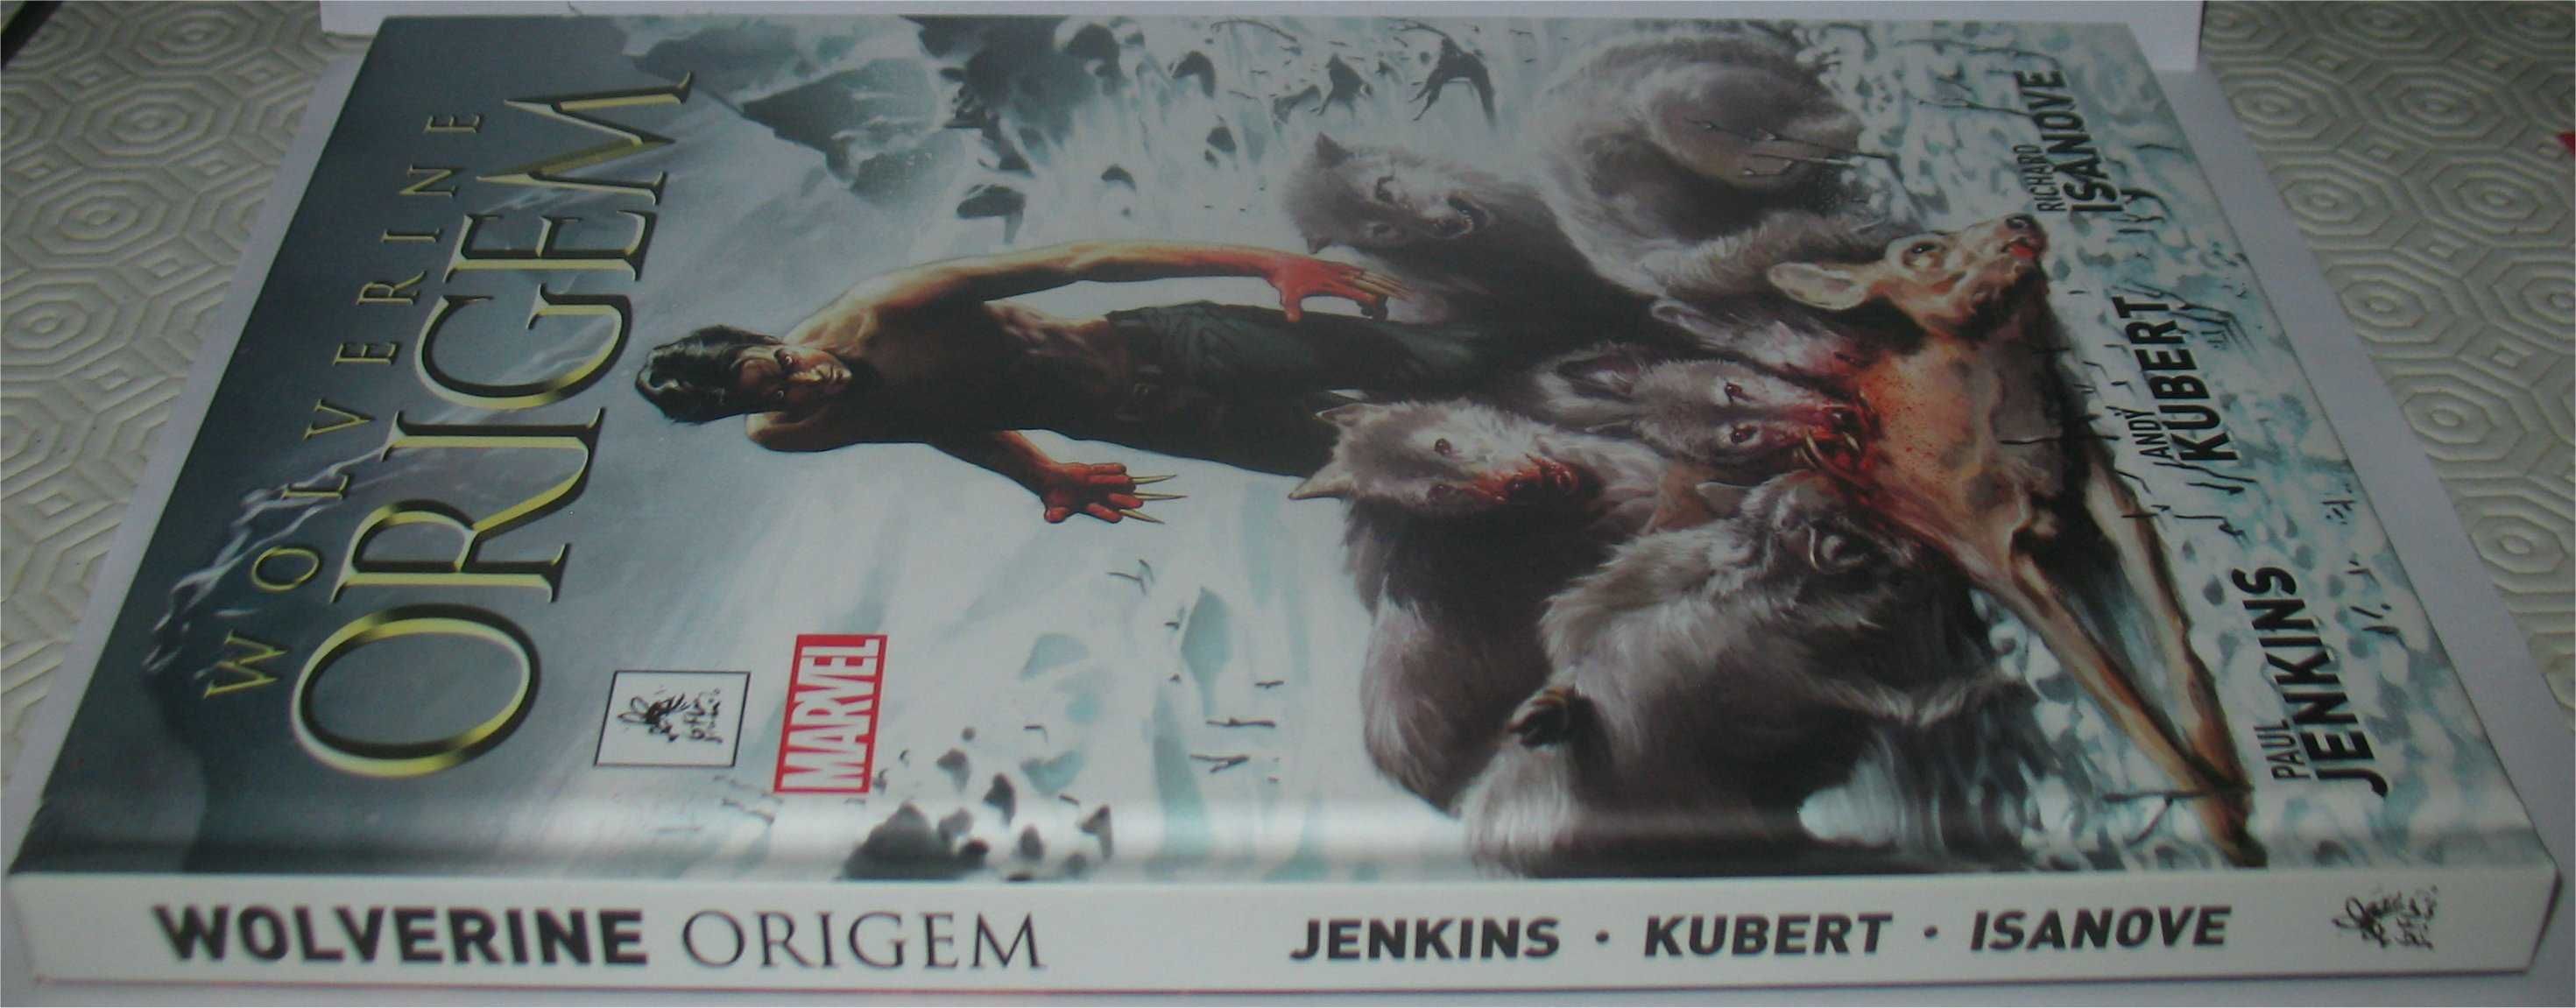 Wolverine - Origem (2015)